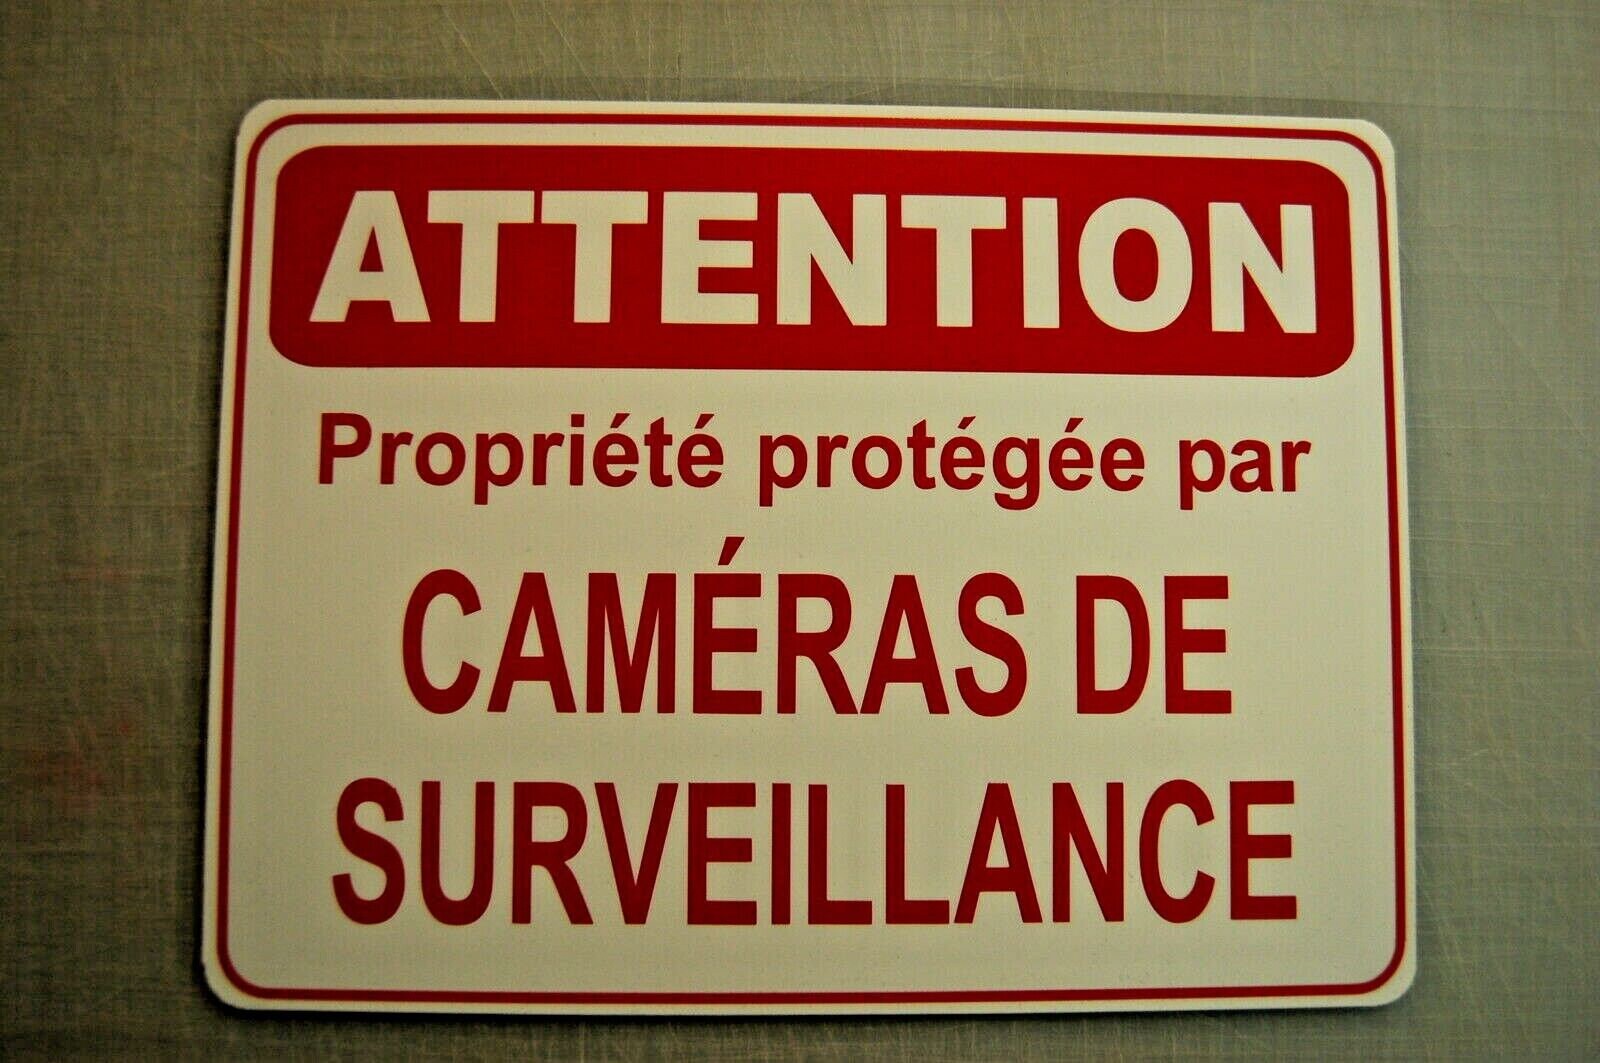 Surveillance par caméra